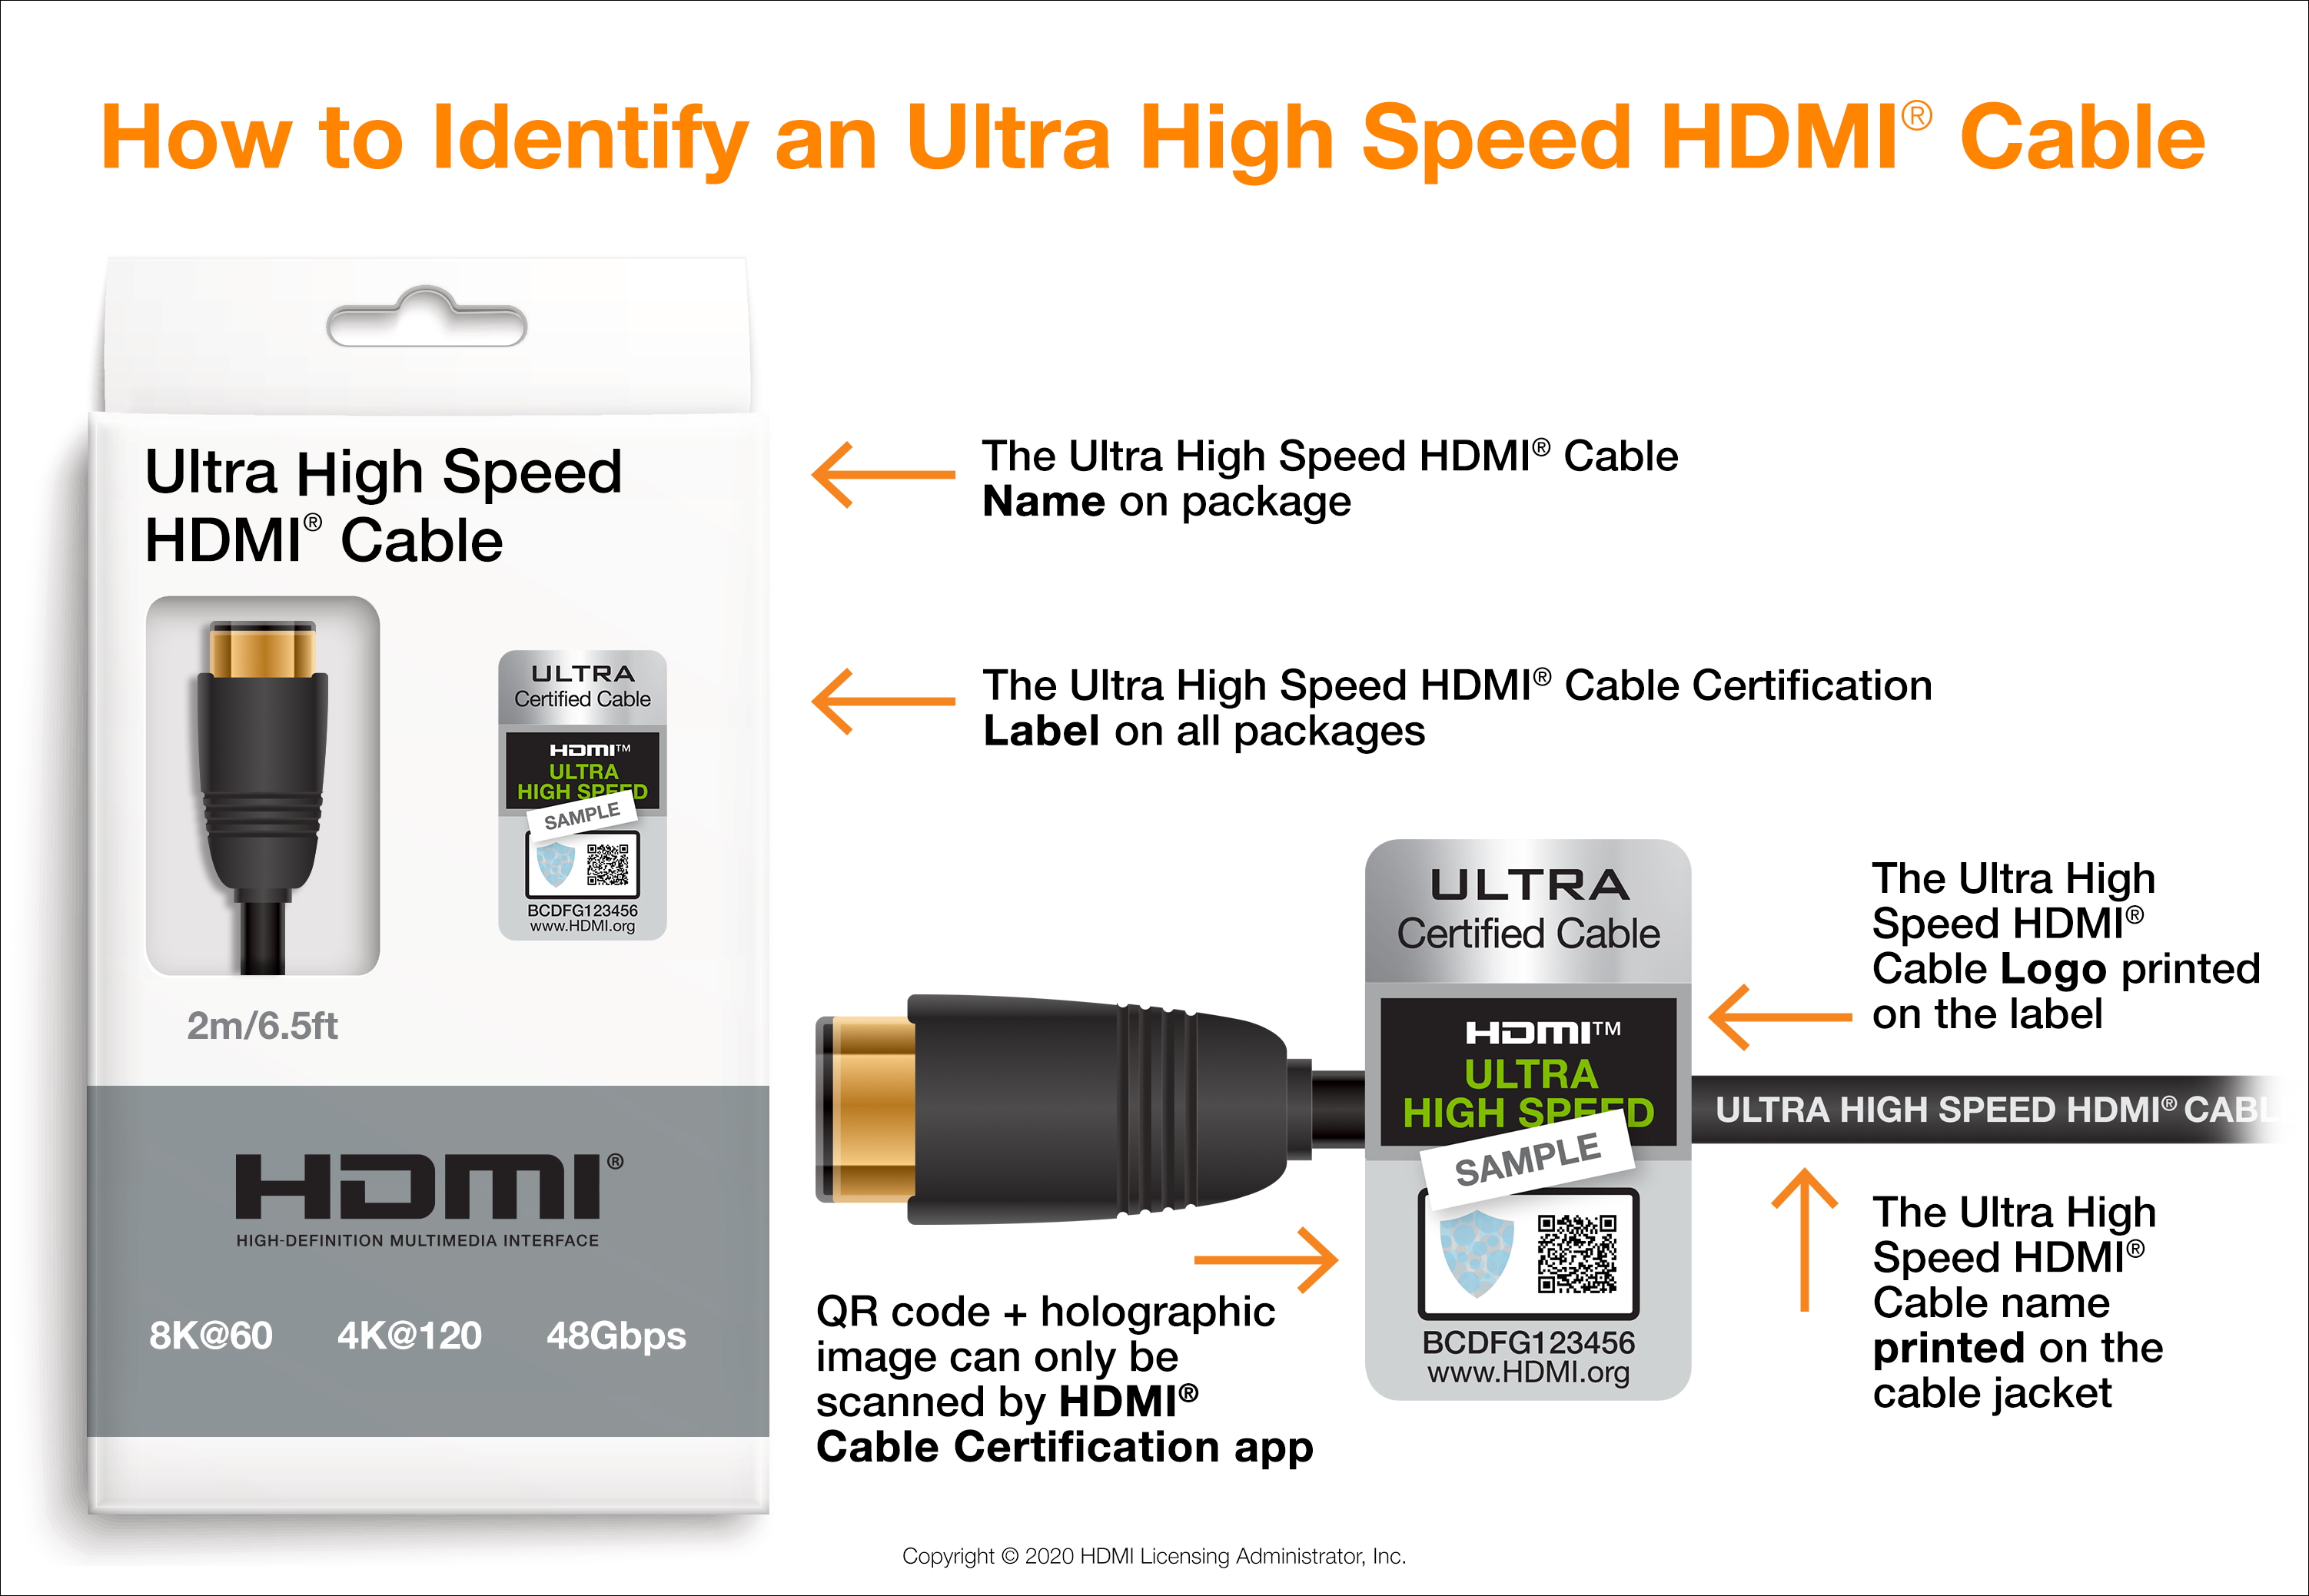 CÂBLE USB C VERS HDMI 2.1 (8 K à 60 Hz), Belkin US